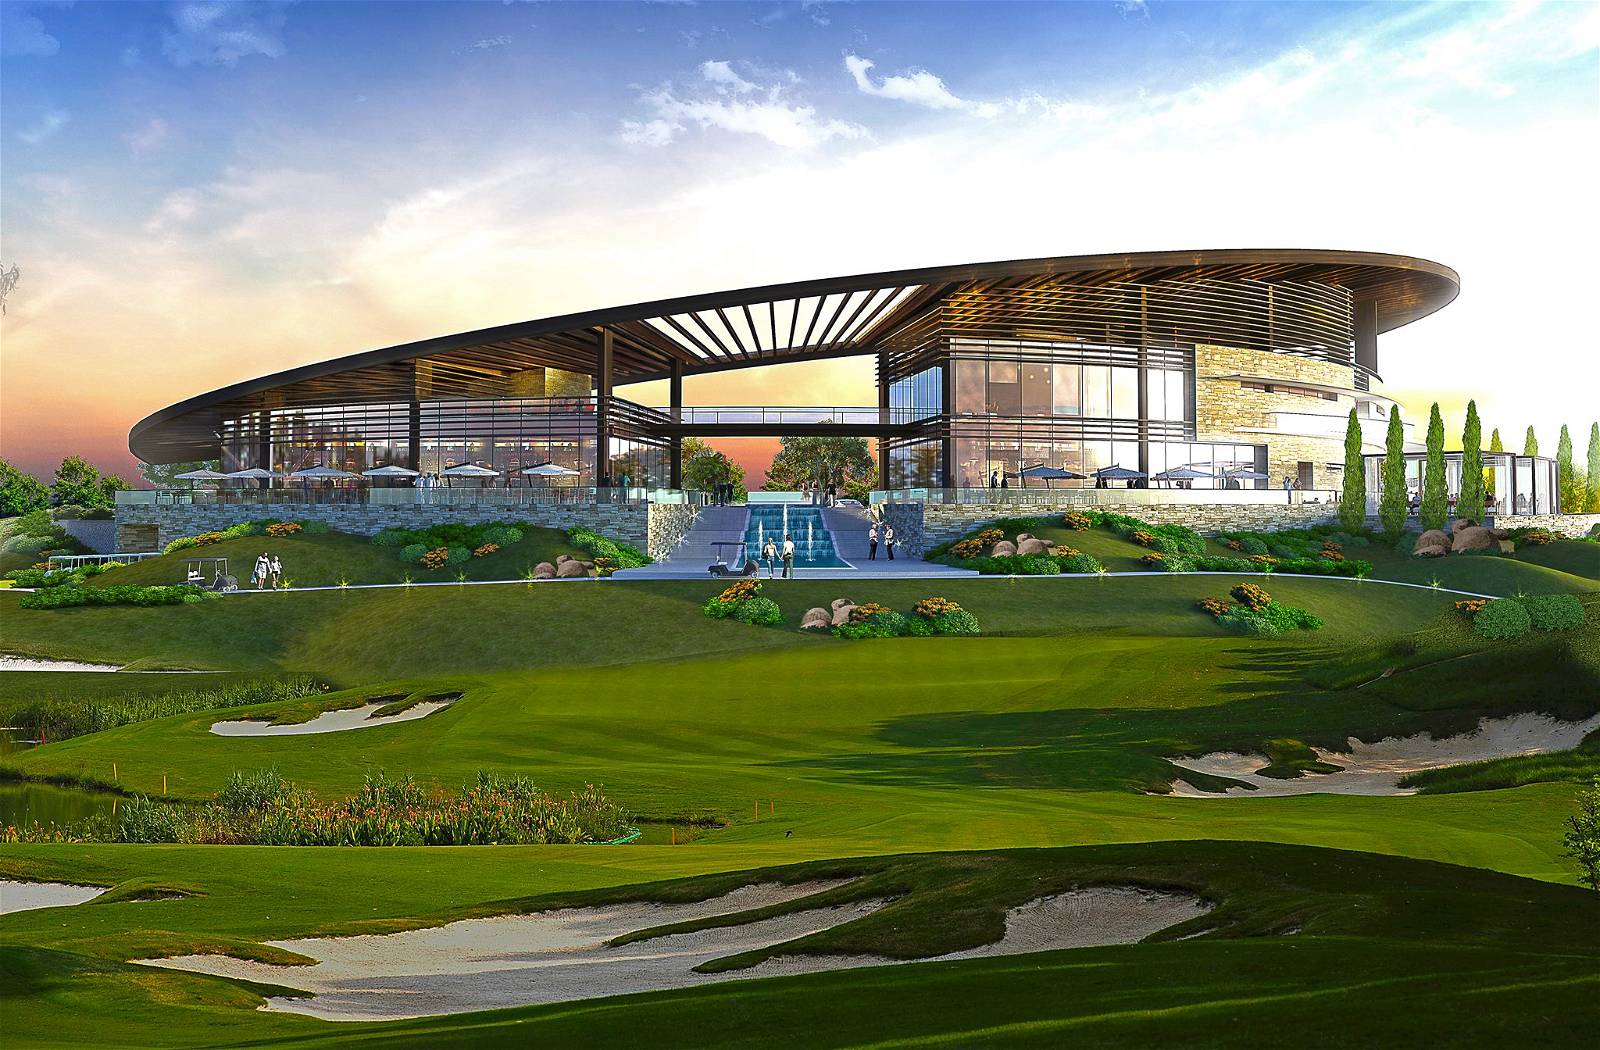 Clubhouse, Bunker, Trump International Golf Club, Dubai, United Arab Emirates